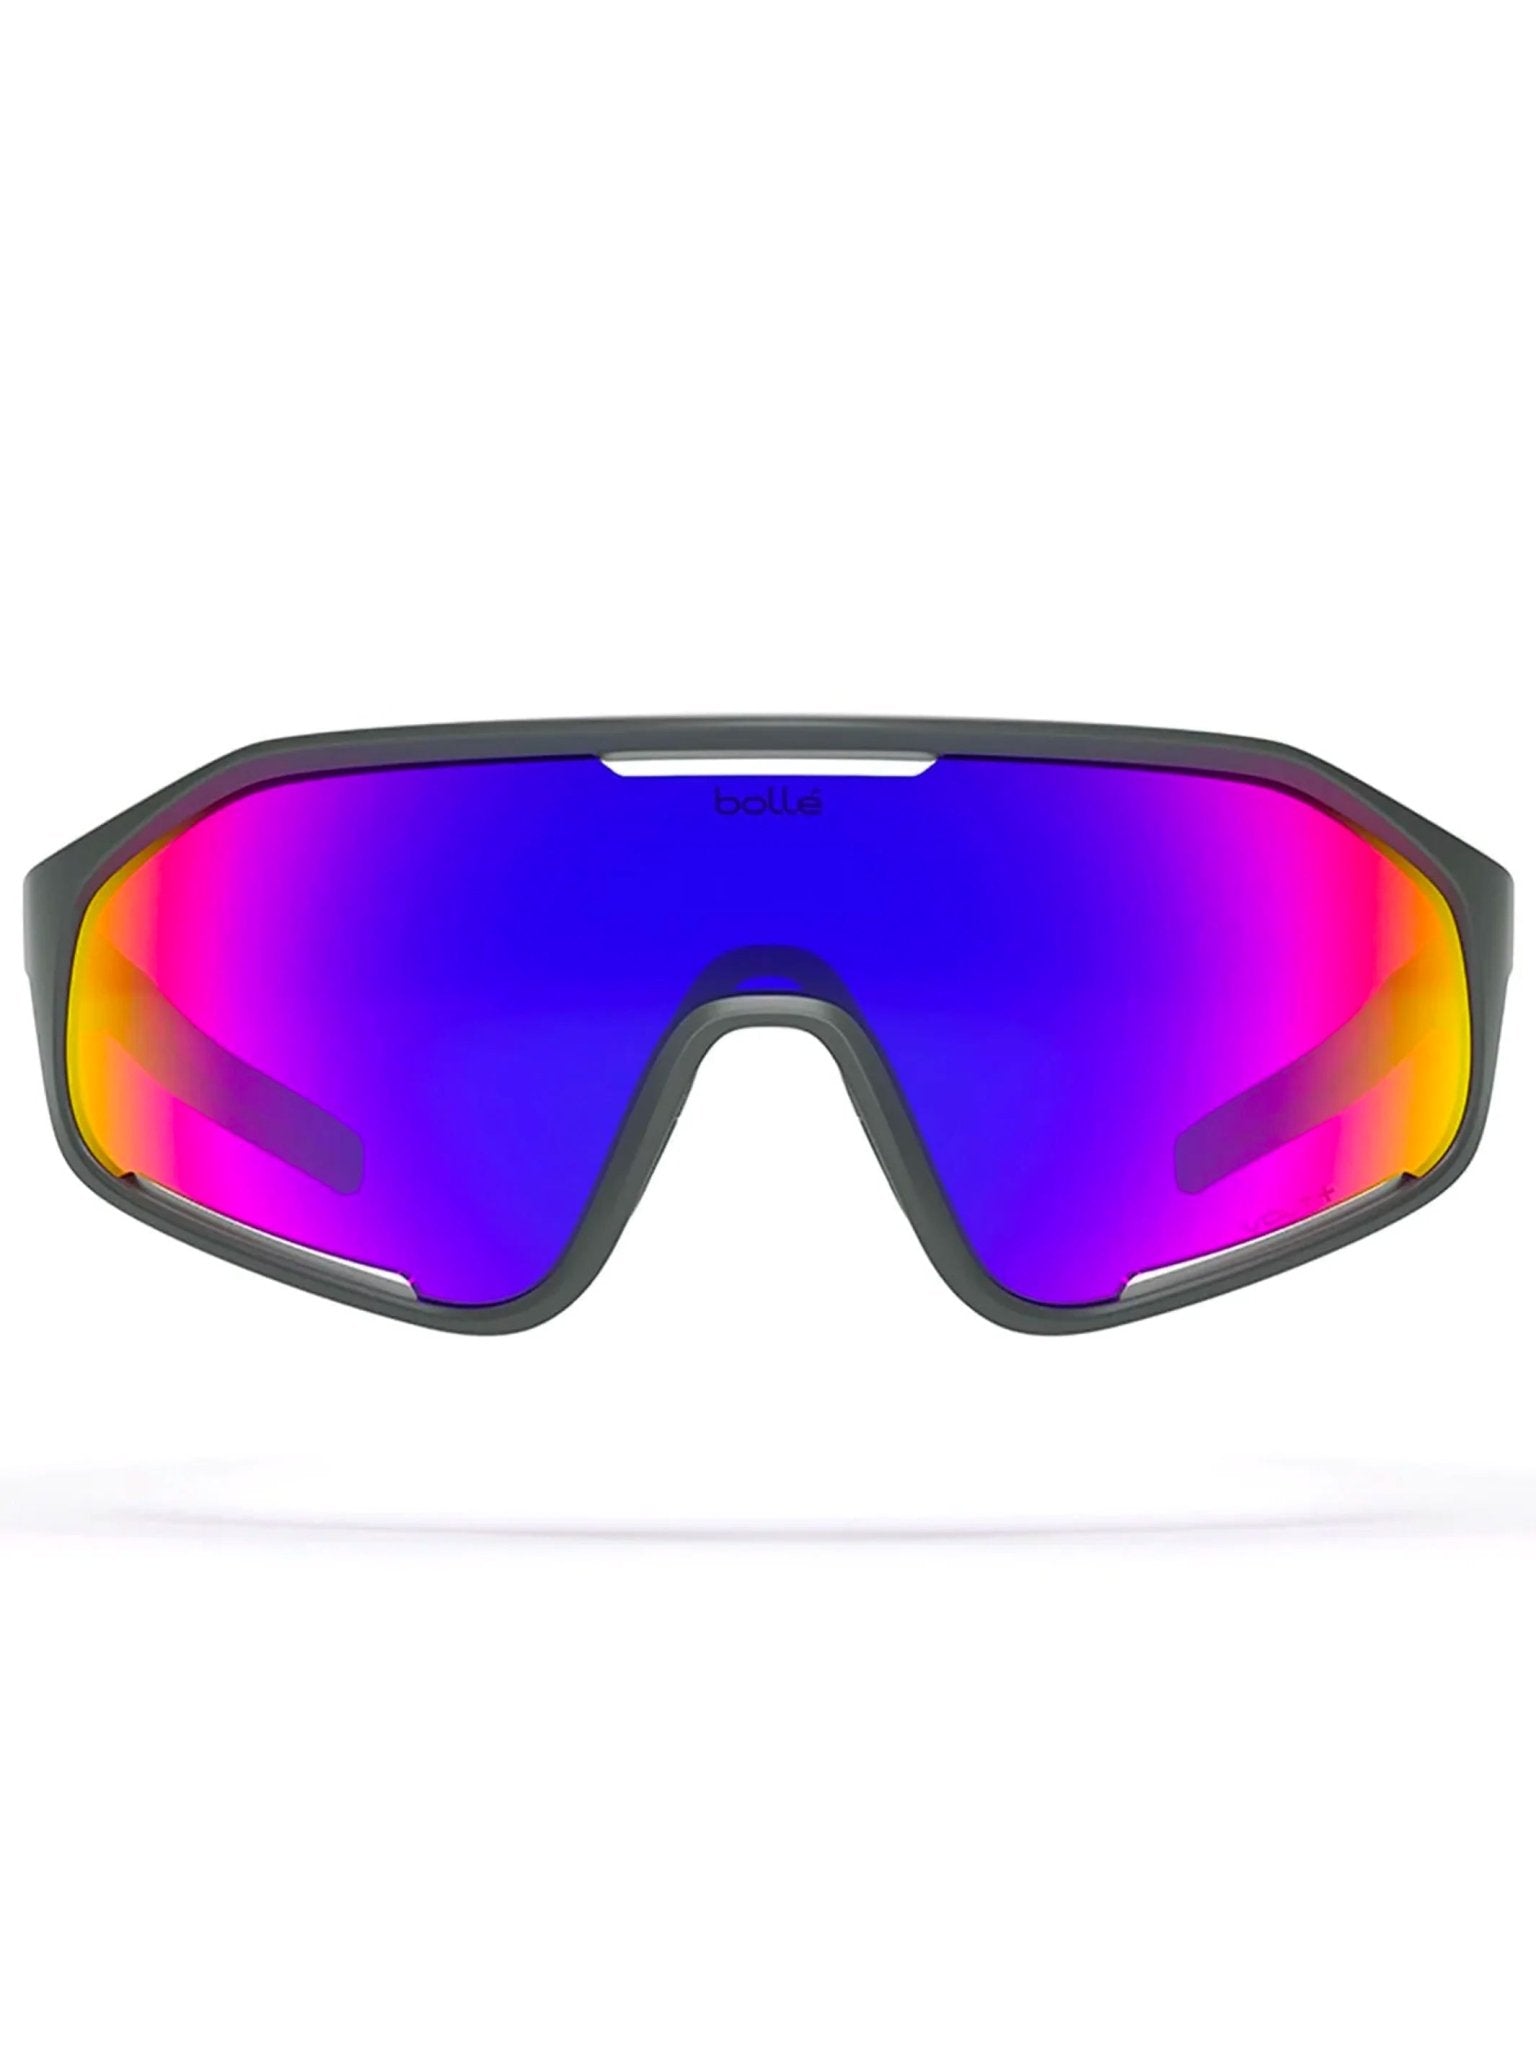 4elementsclothingBolléBolle - C-SHIFTER Sunglasses Titanium Matte - 1 Volt UltravioletsunglassesBS005005